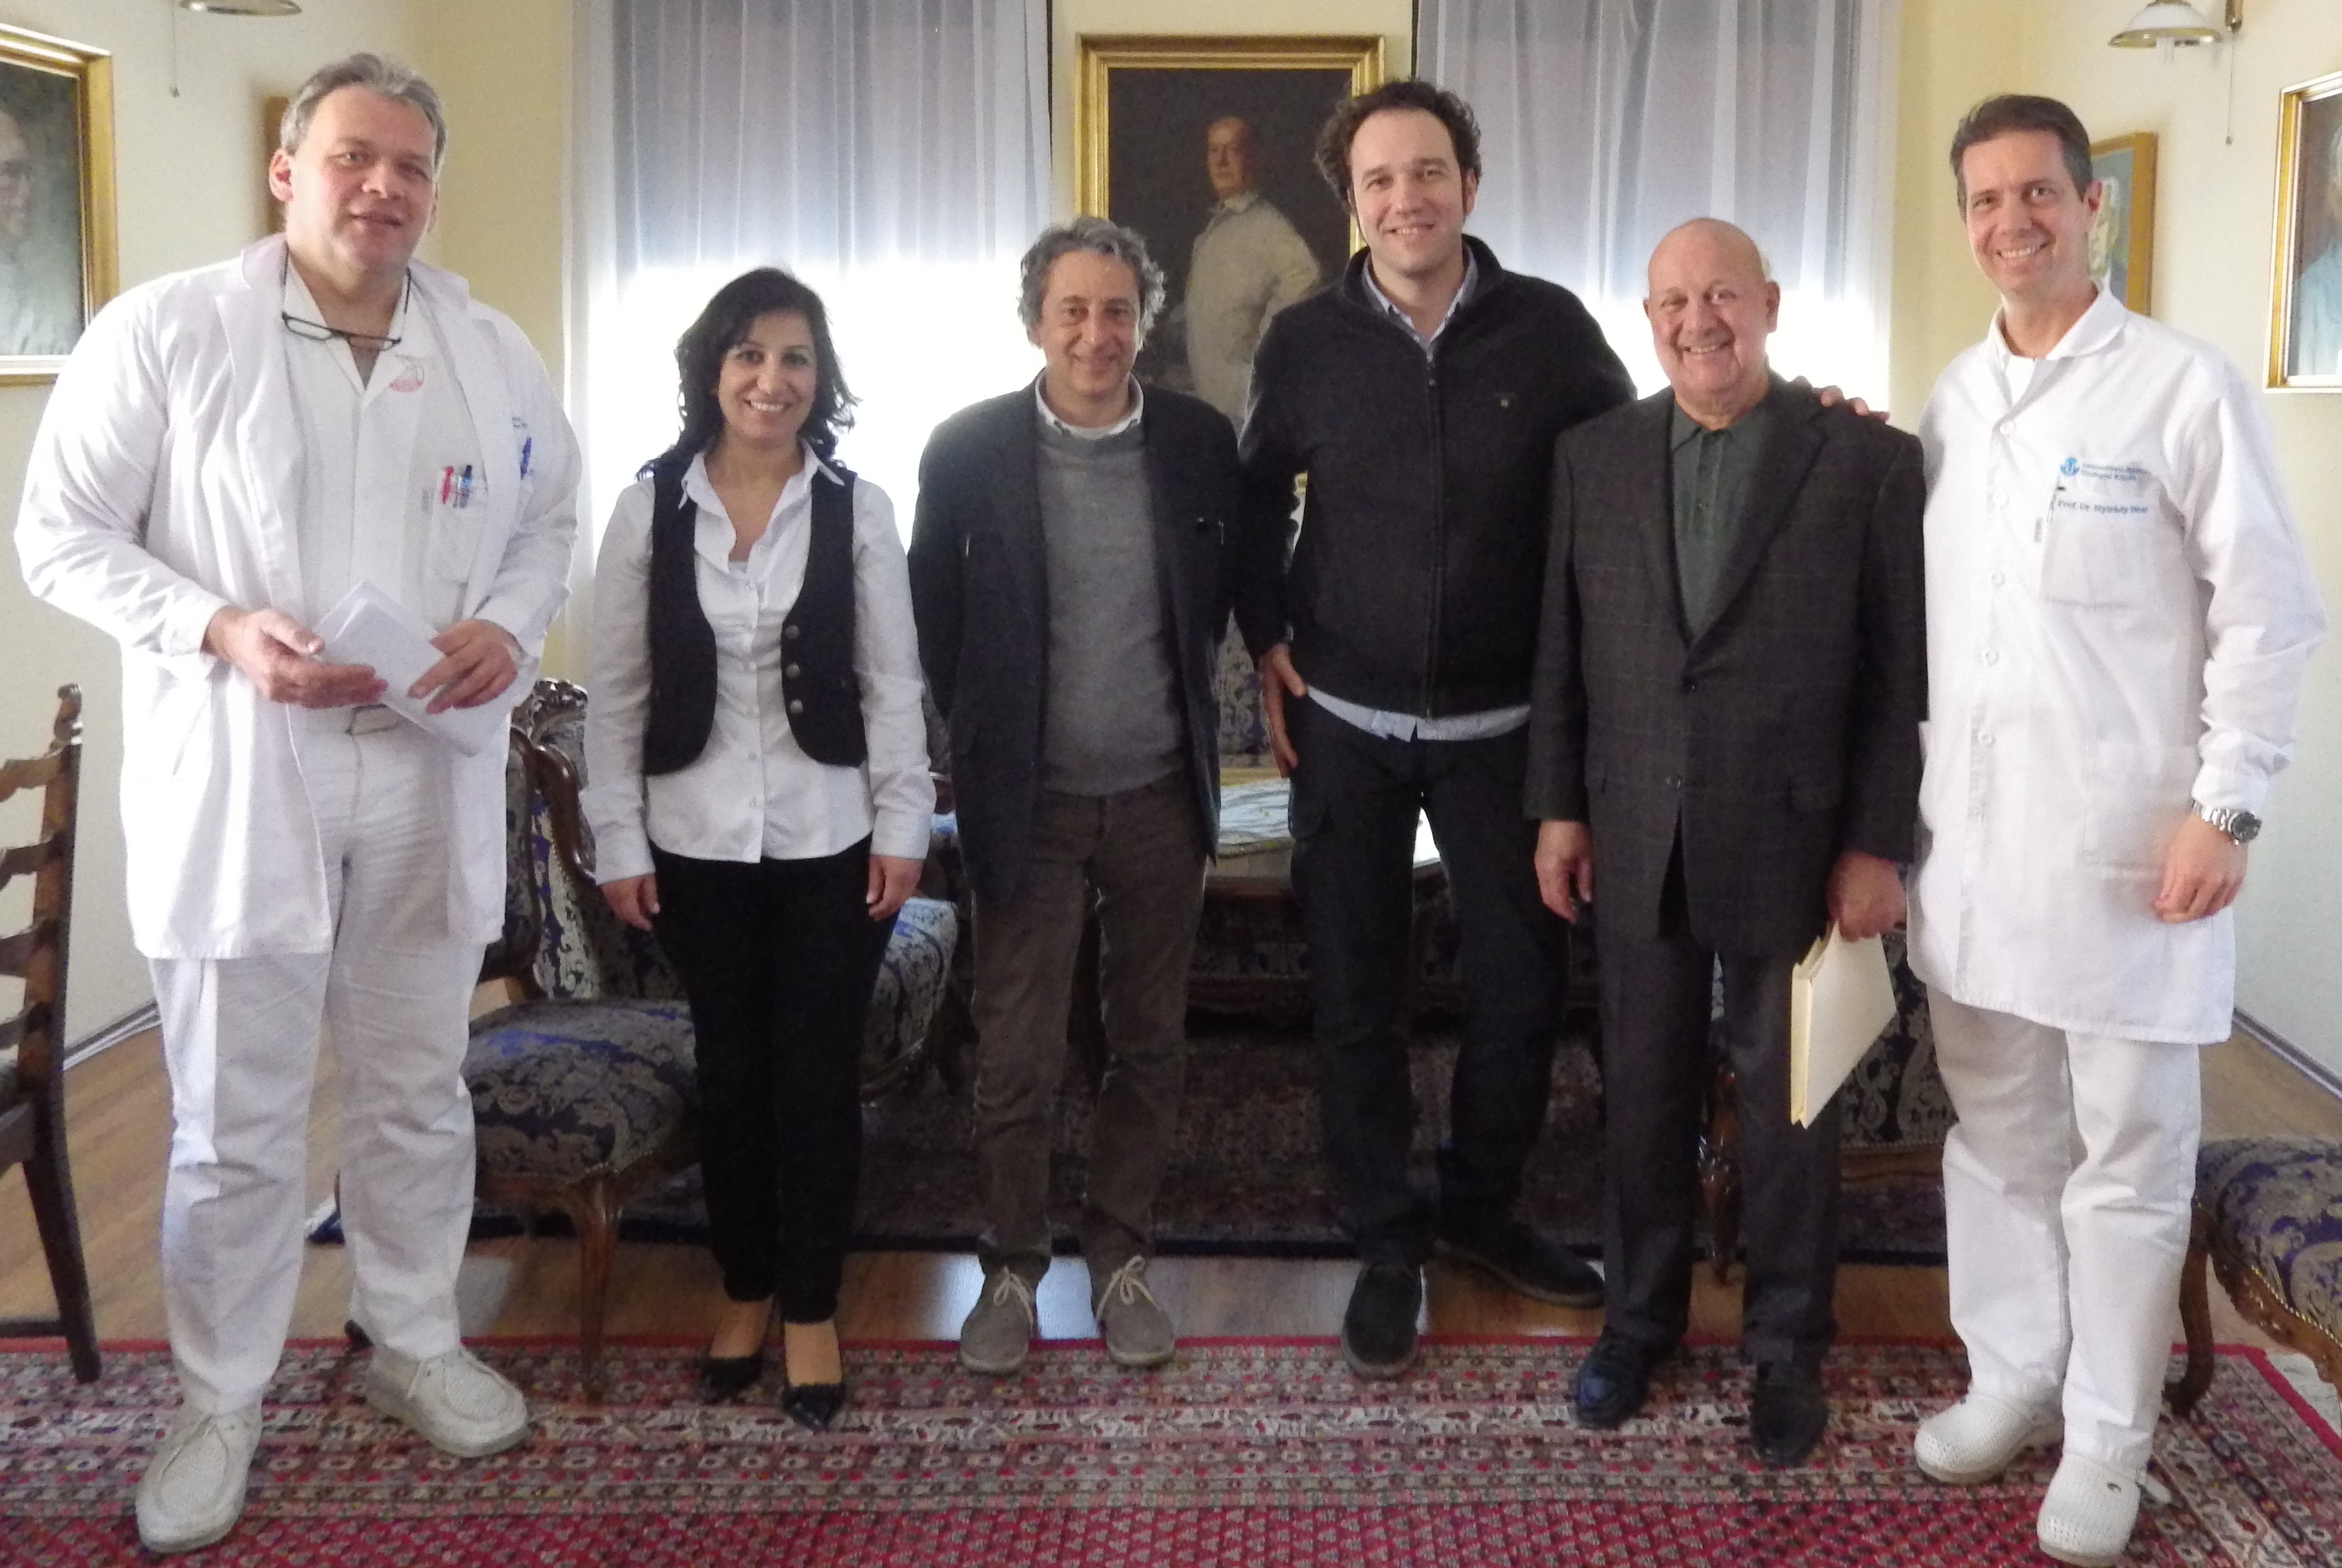 Balról: Dr. Kopa Zsolt, Dr. Leila Sati, Prof. Fabrizio Scroppo, Dr. Otas Dorutovic, Prof. Huszár Gábor, Prof. Nyirády Péter